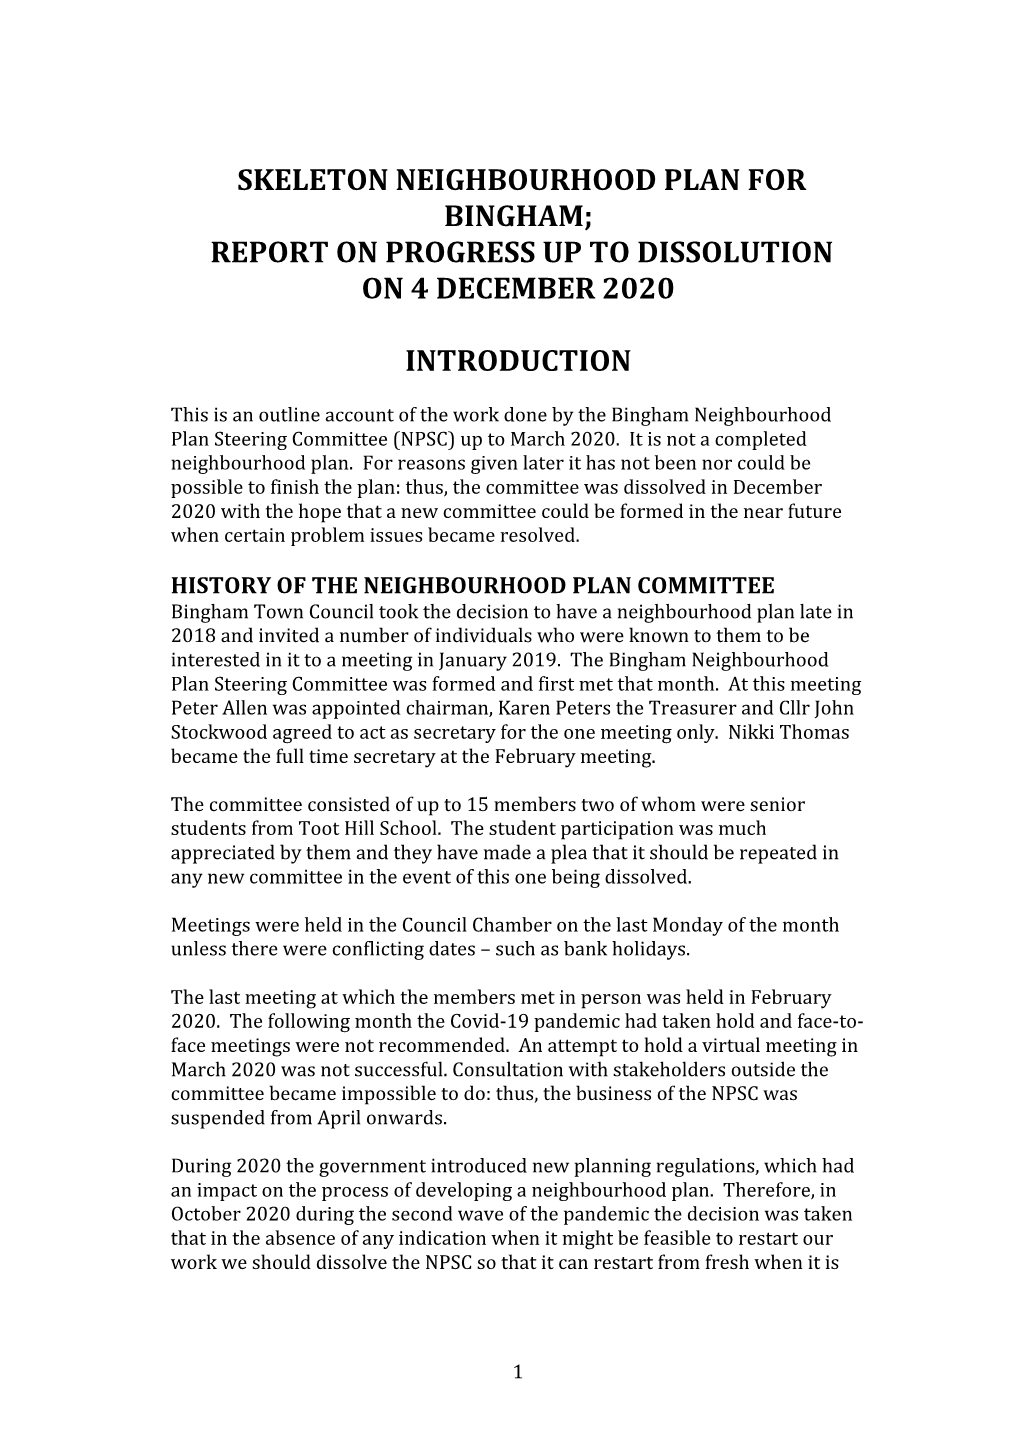 Skeleton Neighbourhood Plan for Bingham; Report on Progress up to Dissolution on 4 December 2020